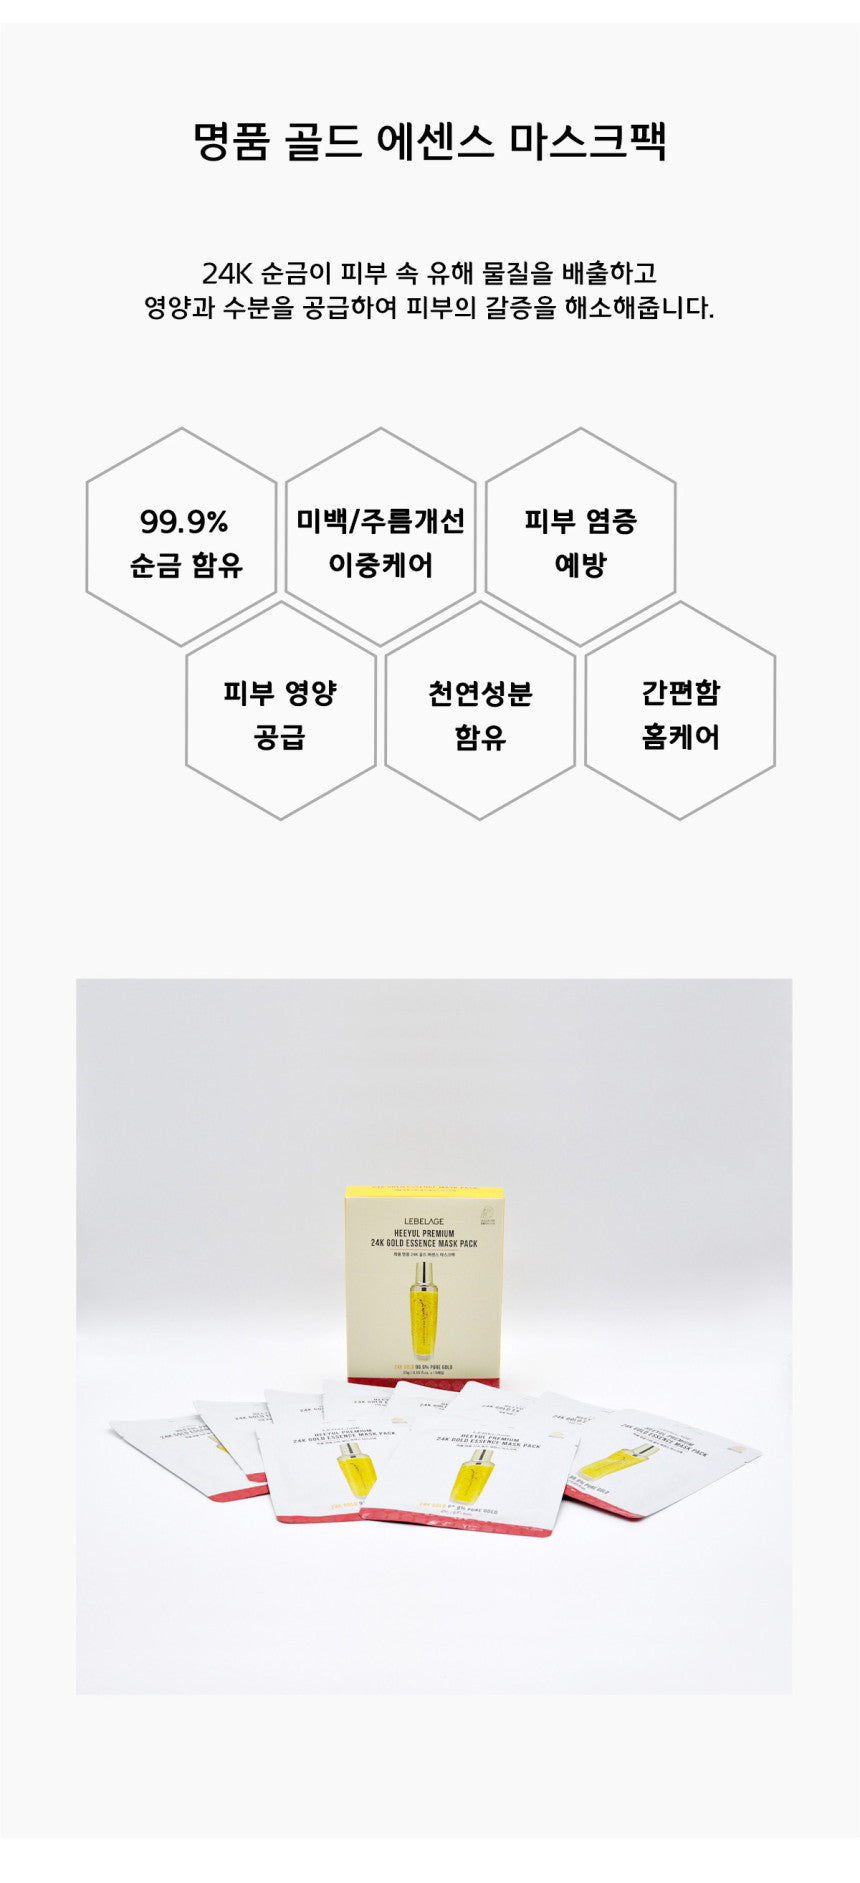 10 Boxes LEBELAGE HEEYUL Premium 24K Gold Essence Masks 10 Sheets Facial Dry Skincare Anti Wrinkles Ageing